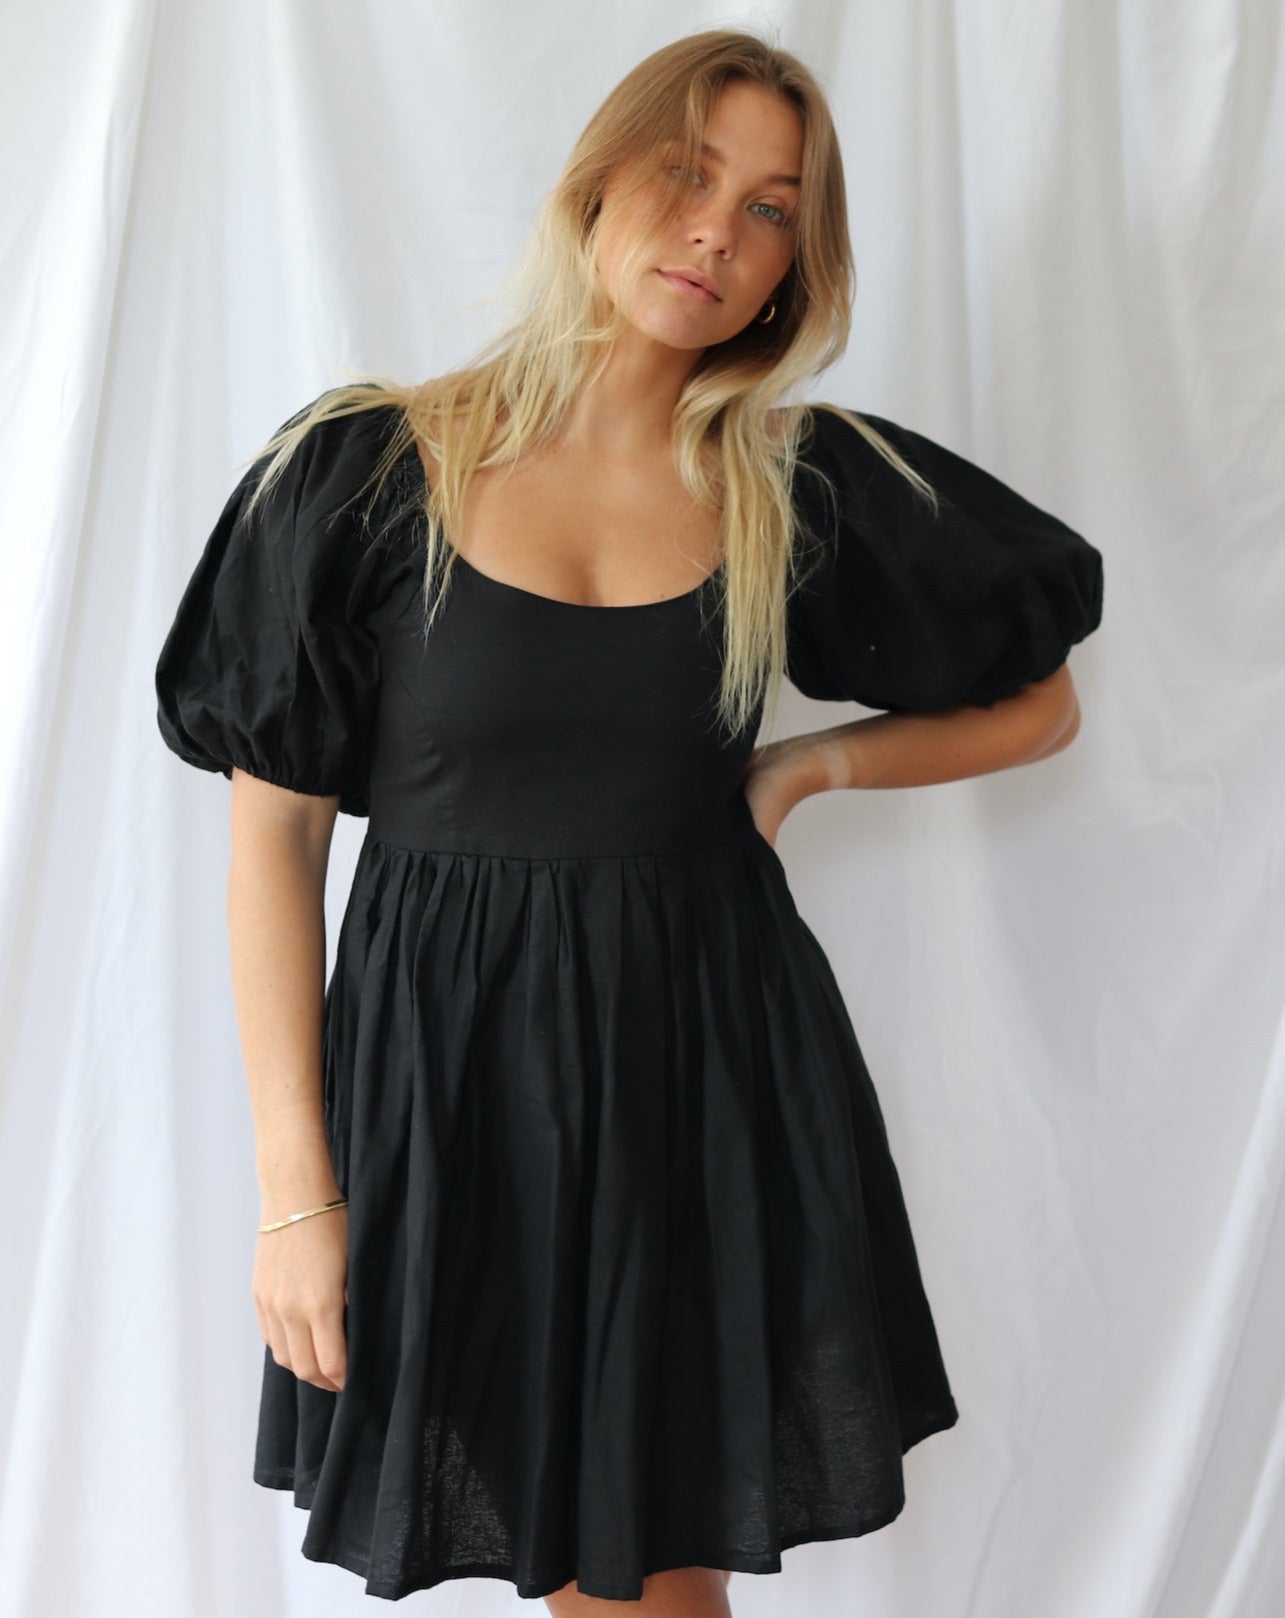 Adore Black Long Sleeve Plunge Maxi Dress with Hood – Club L London - USA